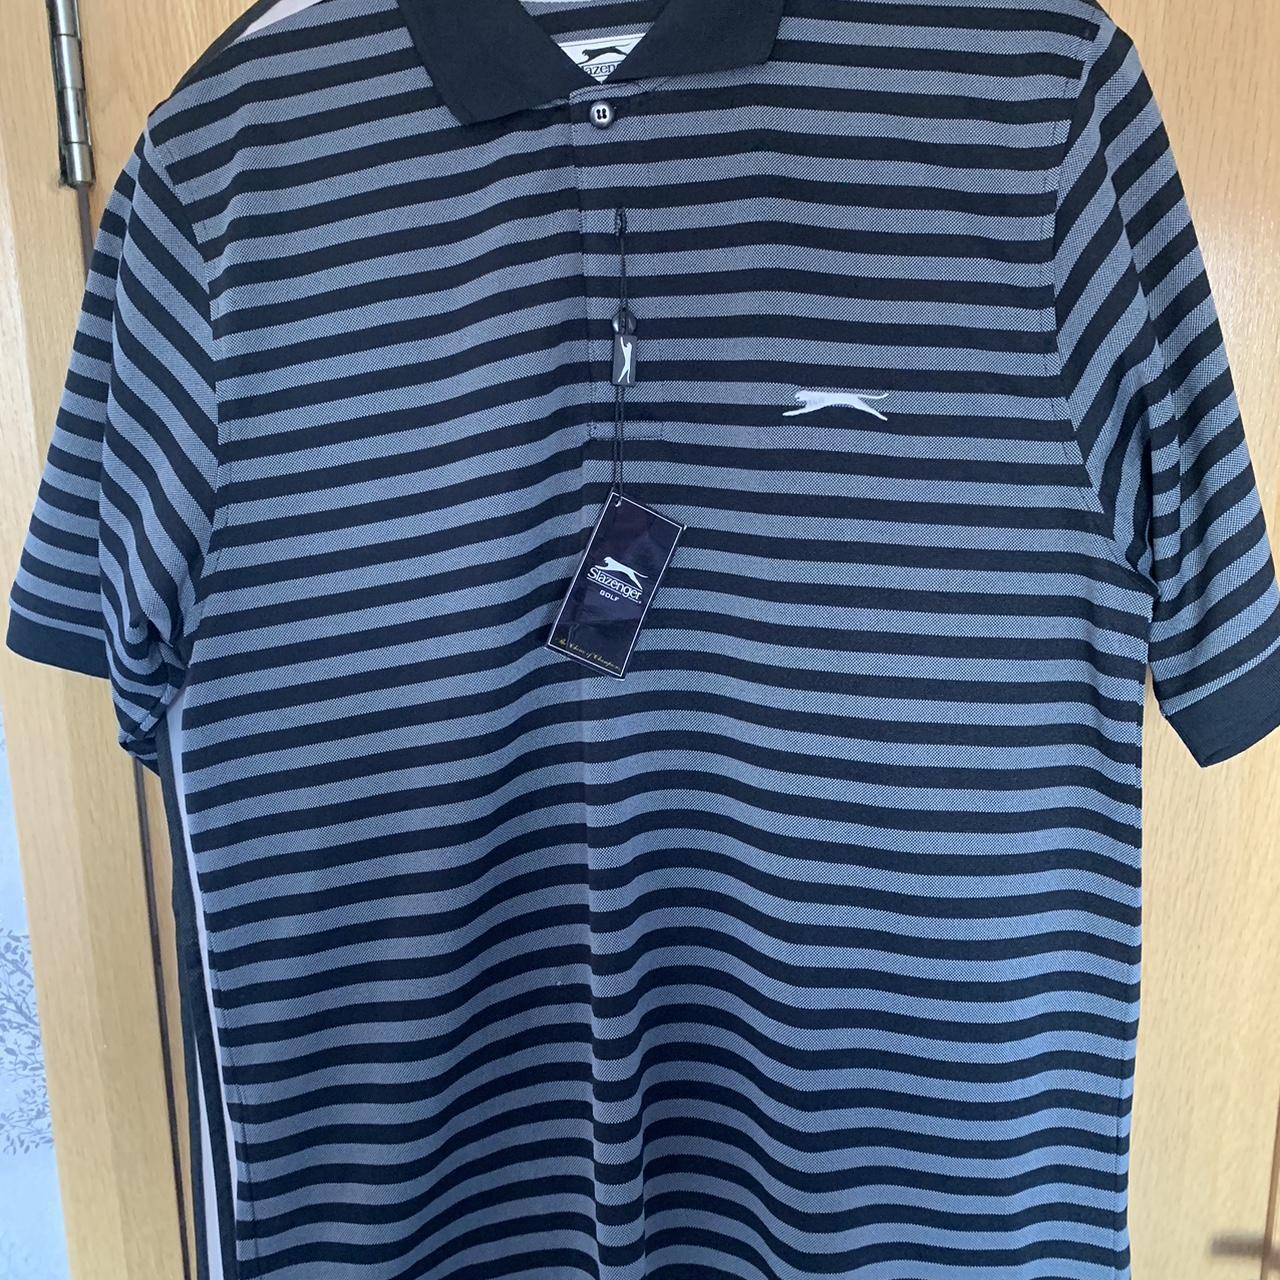 Slazenger golf polo shirt size medium label still... - Depop